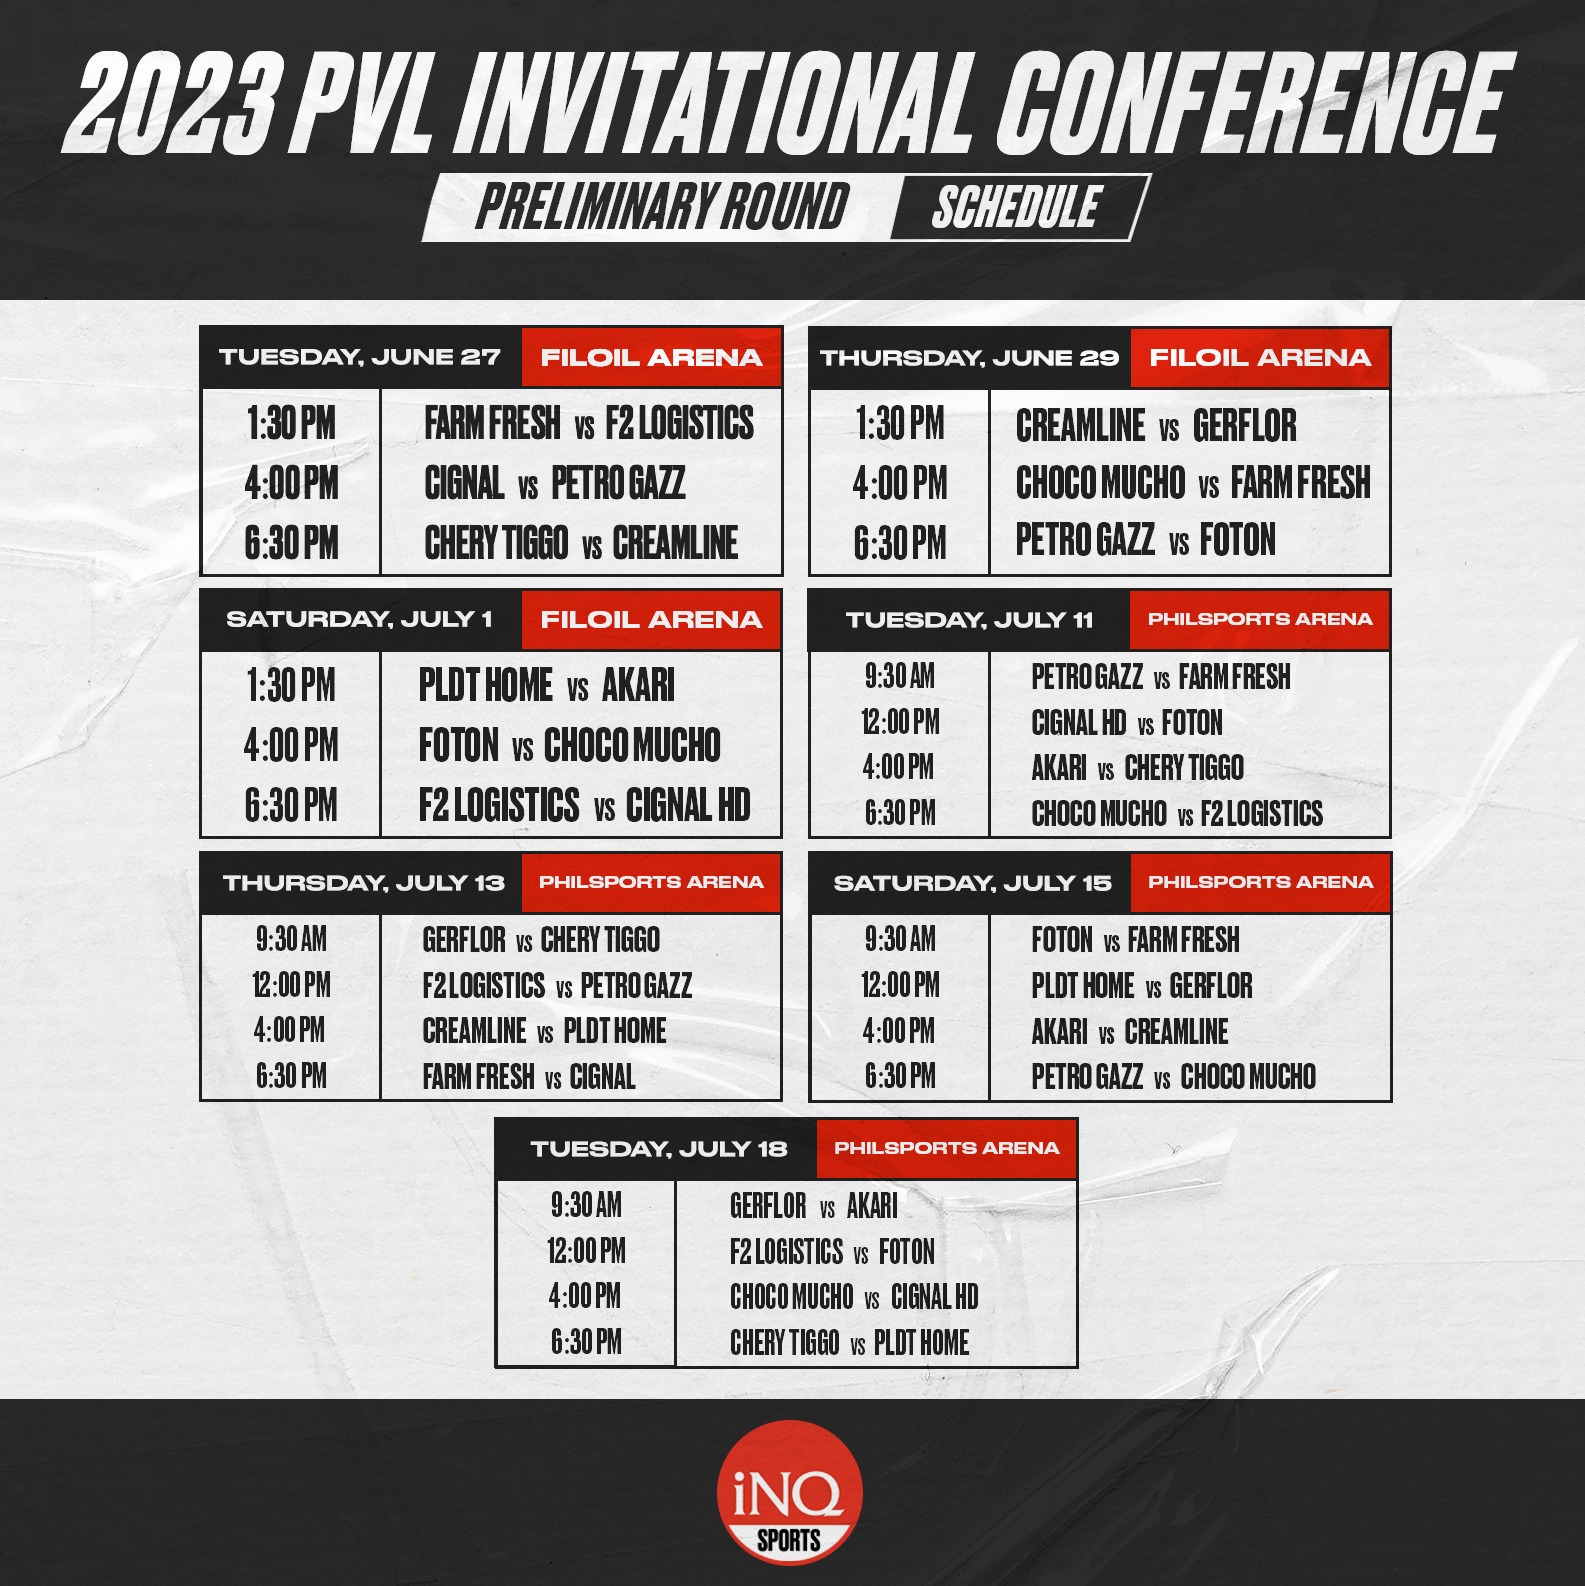 PVL 2023 Invitational Conference preliminary round schedule